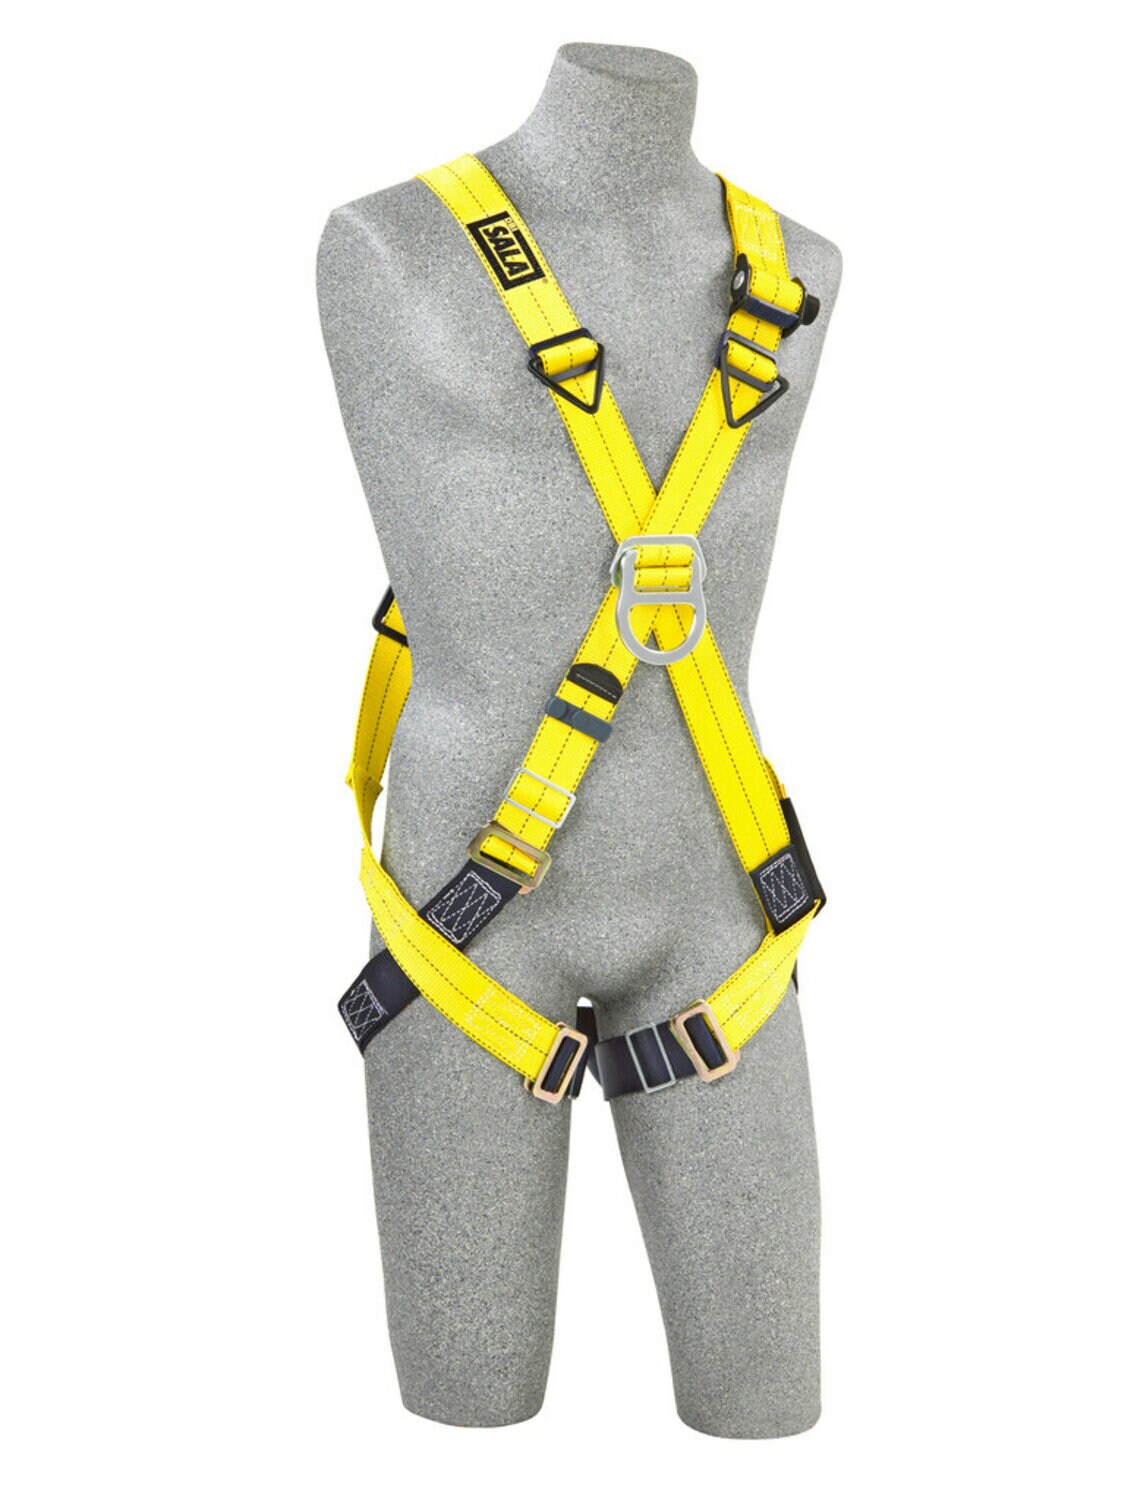 7012815302 - 3M DBI-SALA Delta Cross-Over Climbing Safety Harness 1101856, 2X